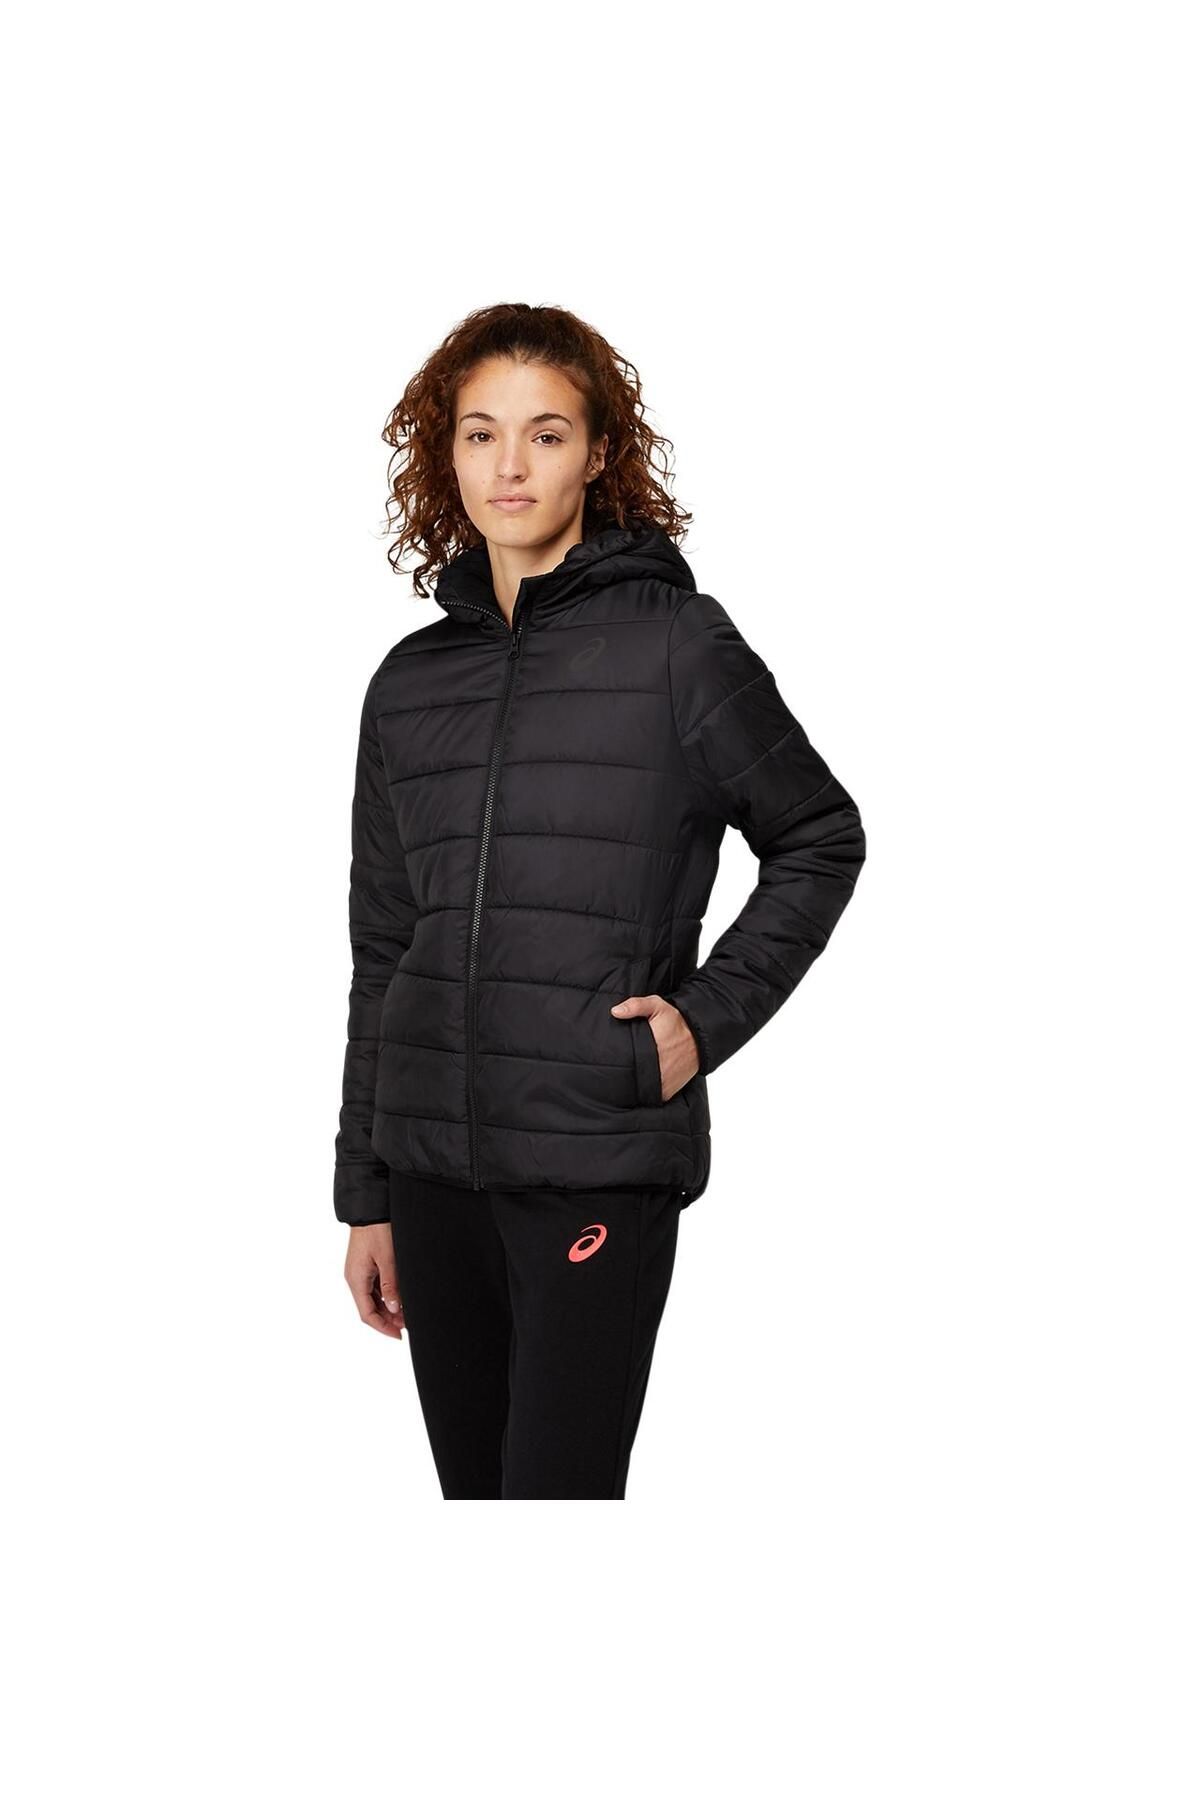 Asics Padded Jacket W Kadın Siyah Ceket 2032c155-001